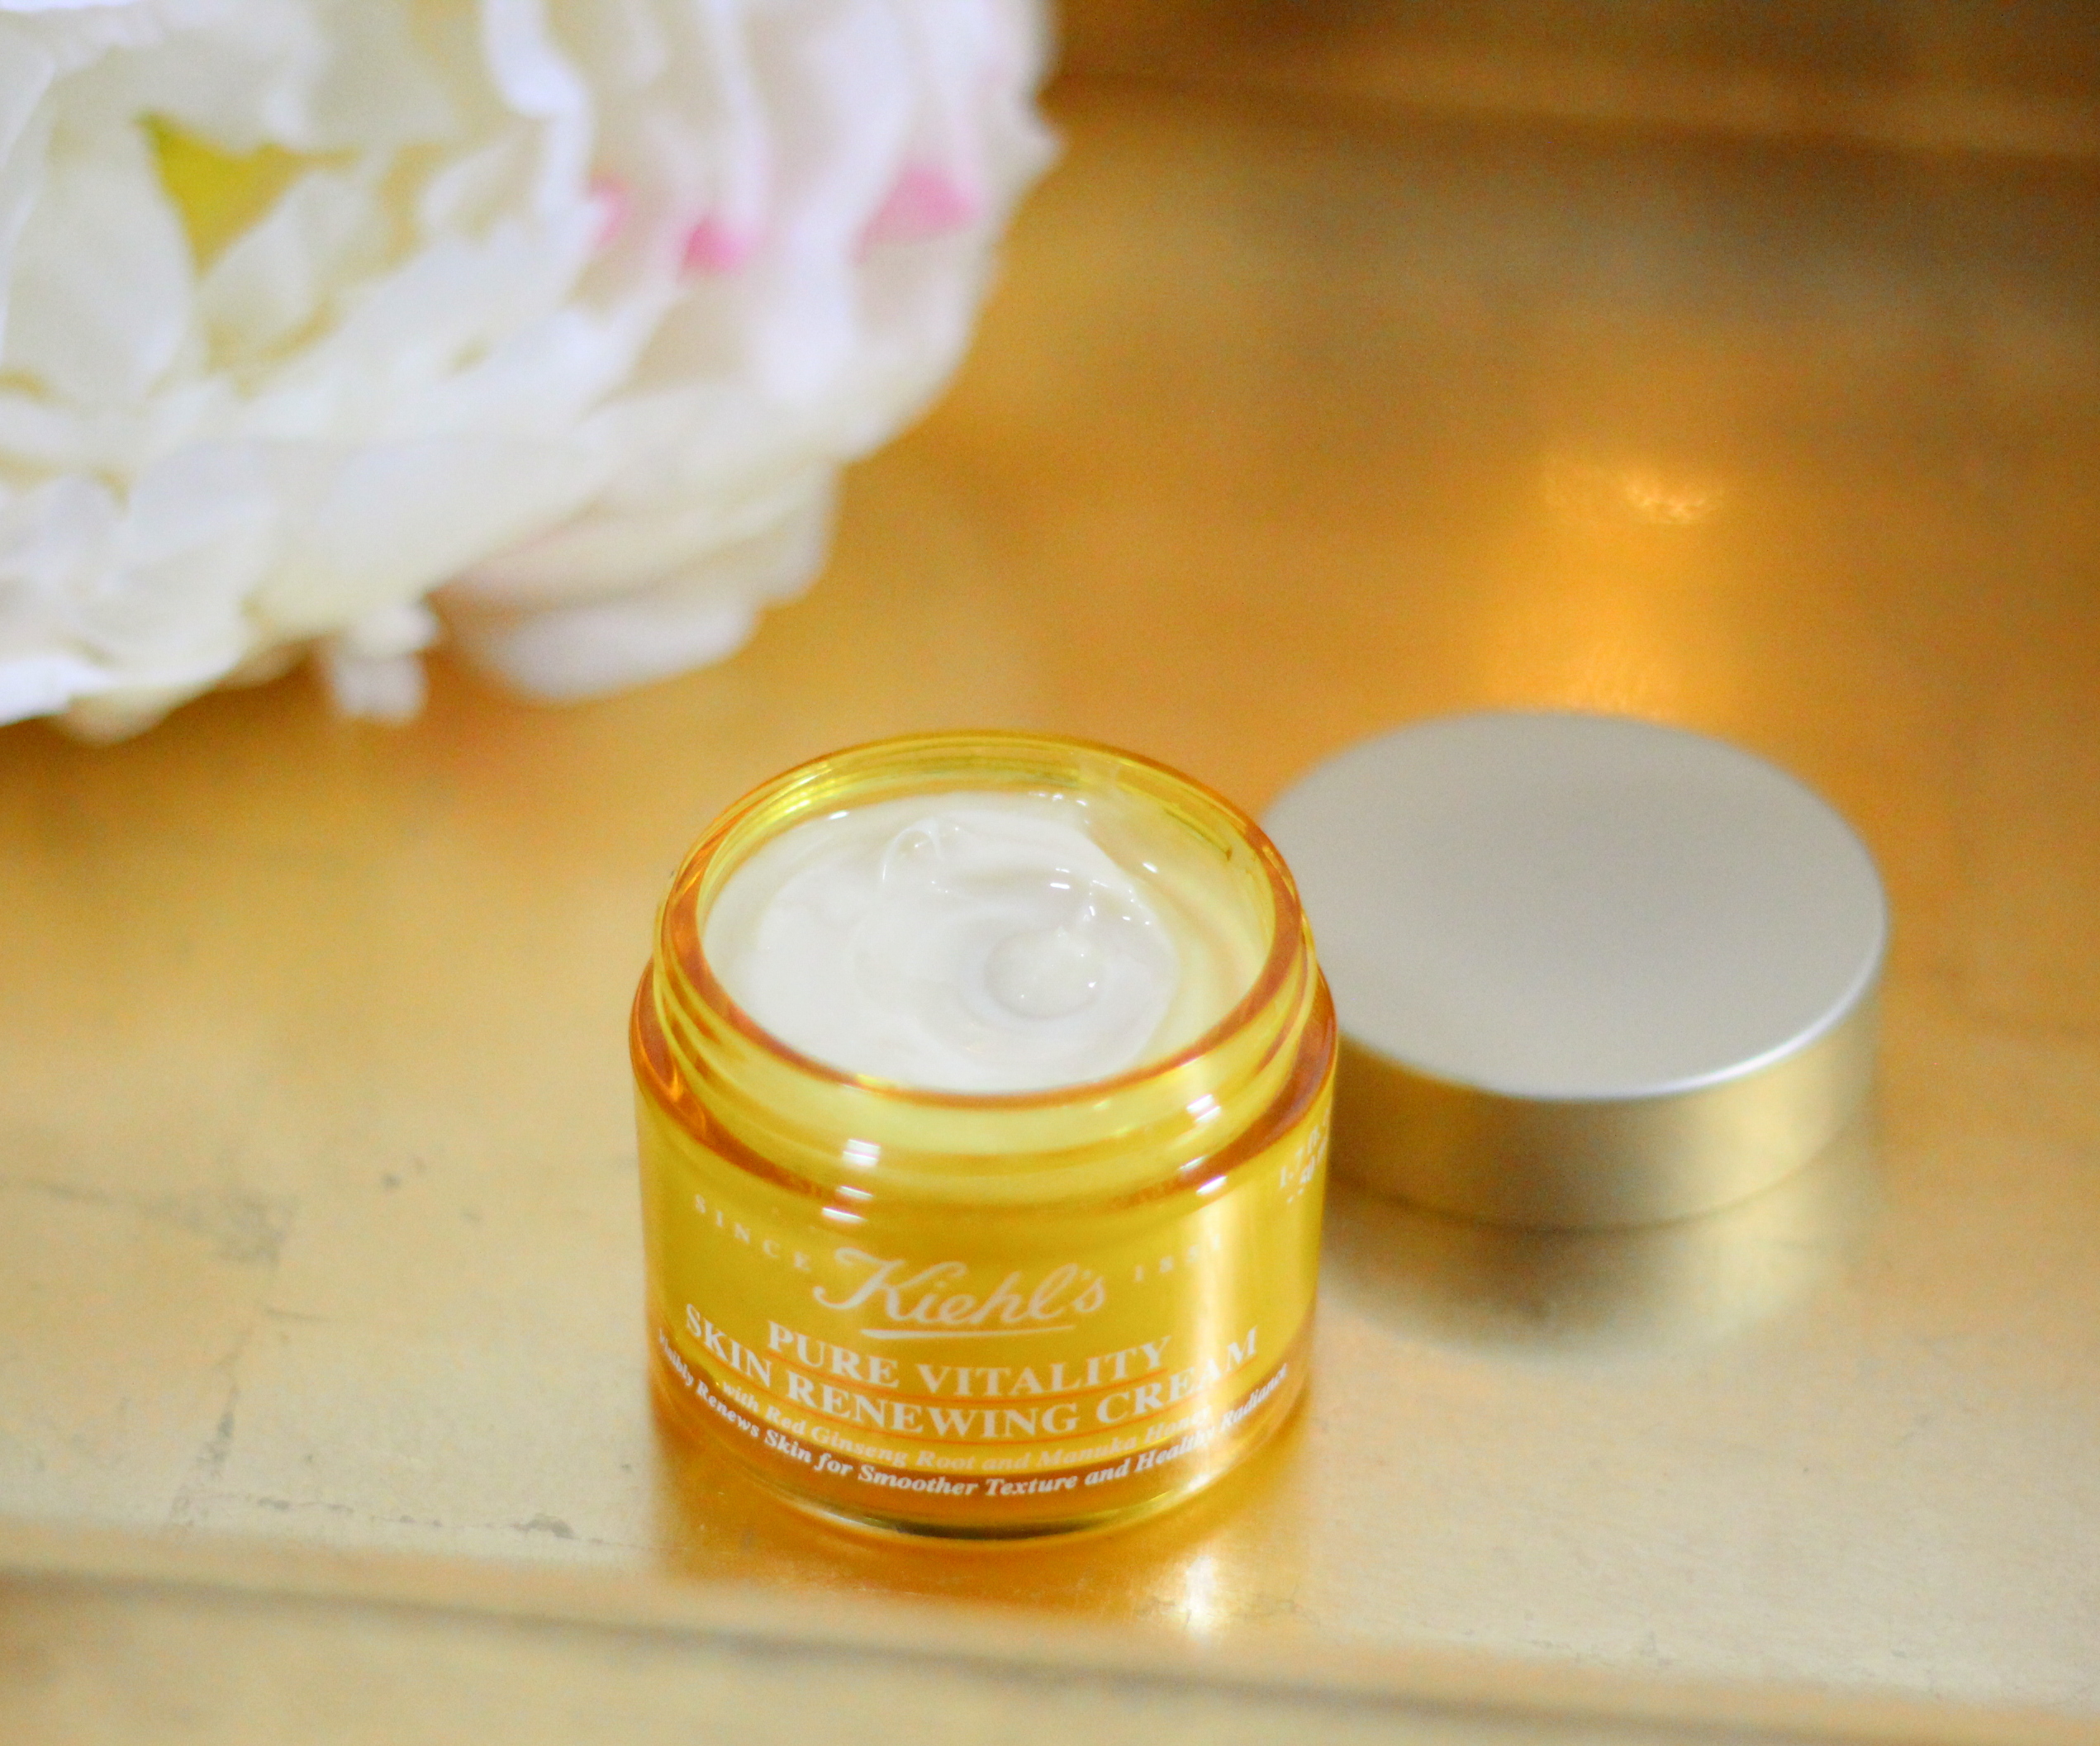 Kiehl's Pure Vitality Skin Renewing Cream Review